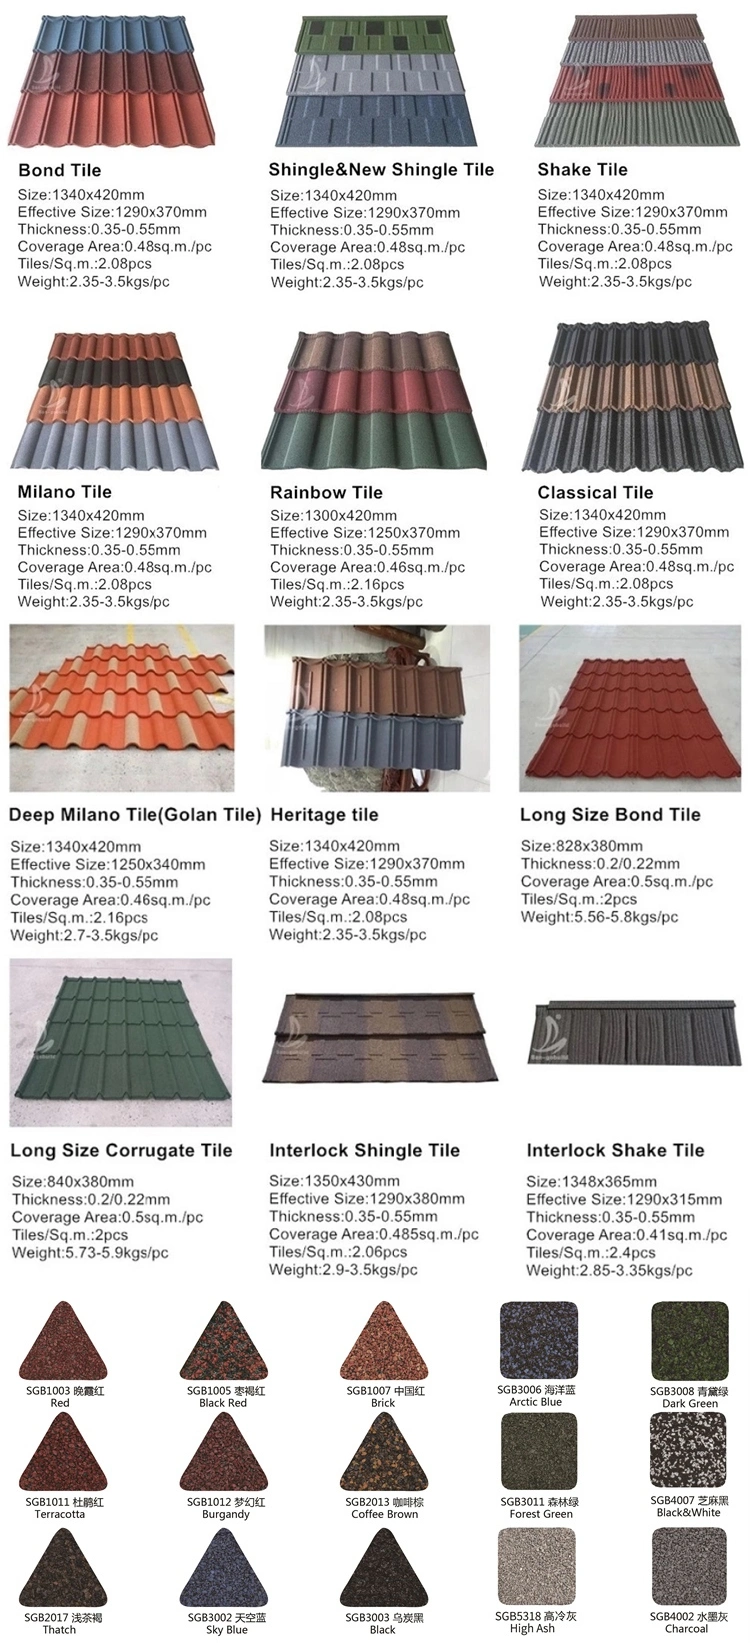 Shingle Design Roof Tile Roof Shingles 50 Year Warranty Better Than Plastic PVC Roof